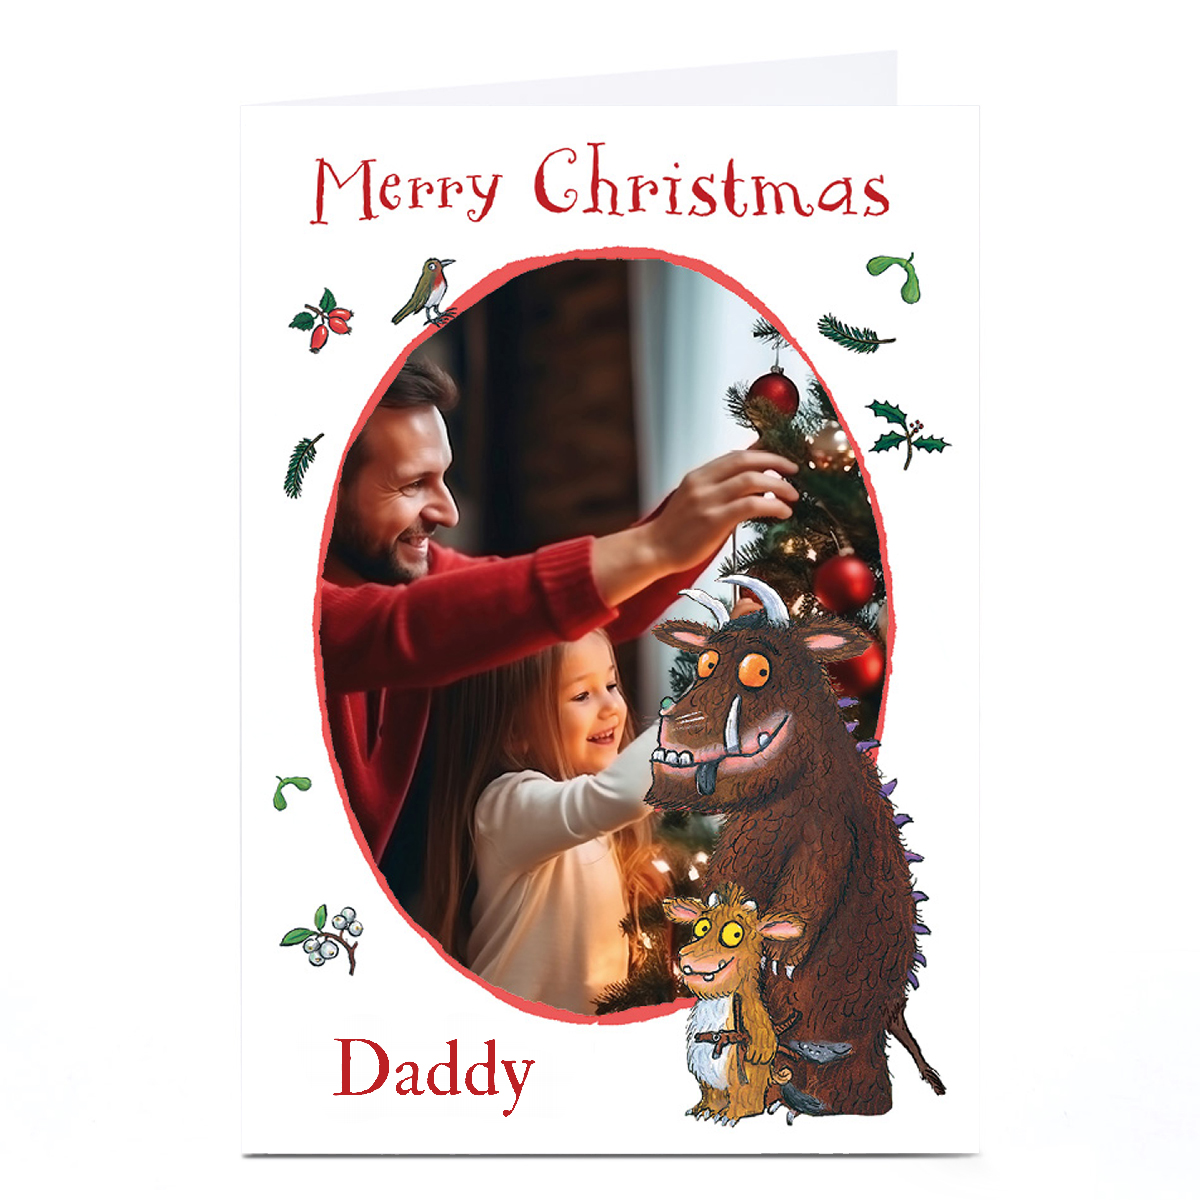 Photo Gruffalo Christmas Card - Daddy and Baby Gruffalo